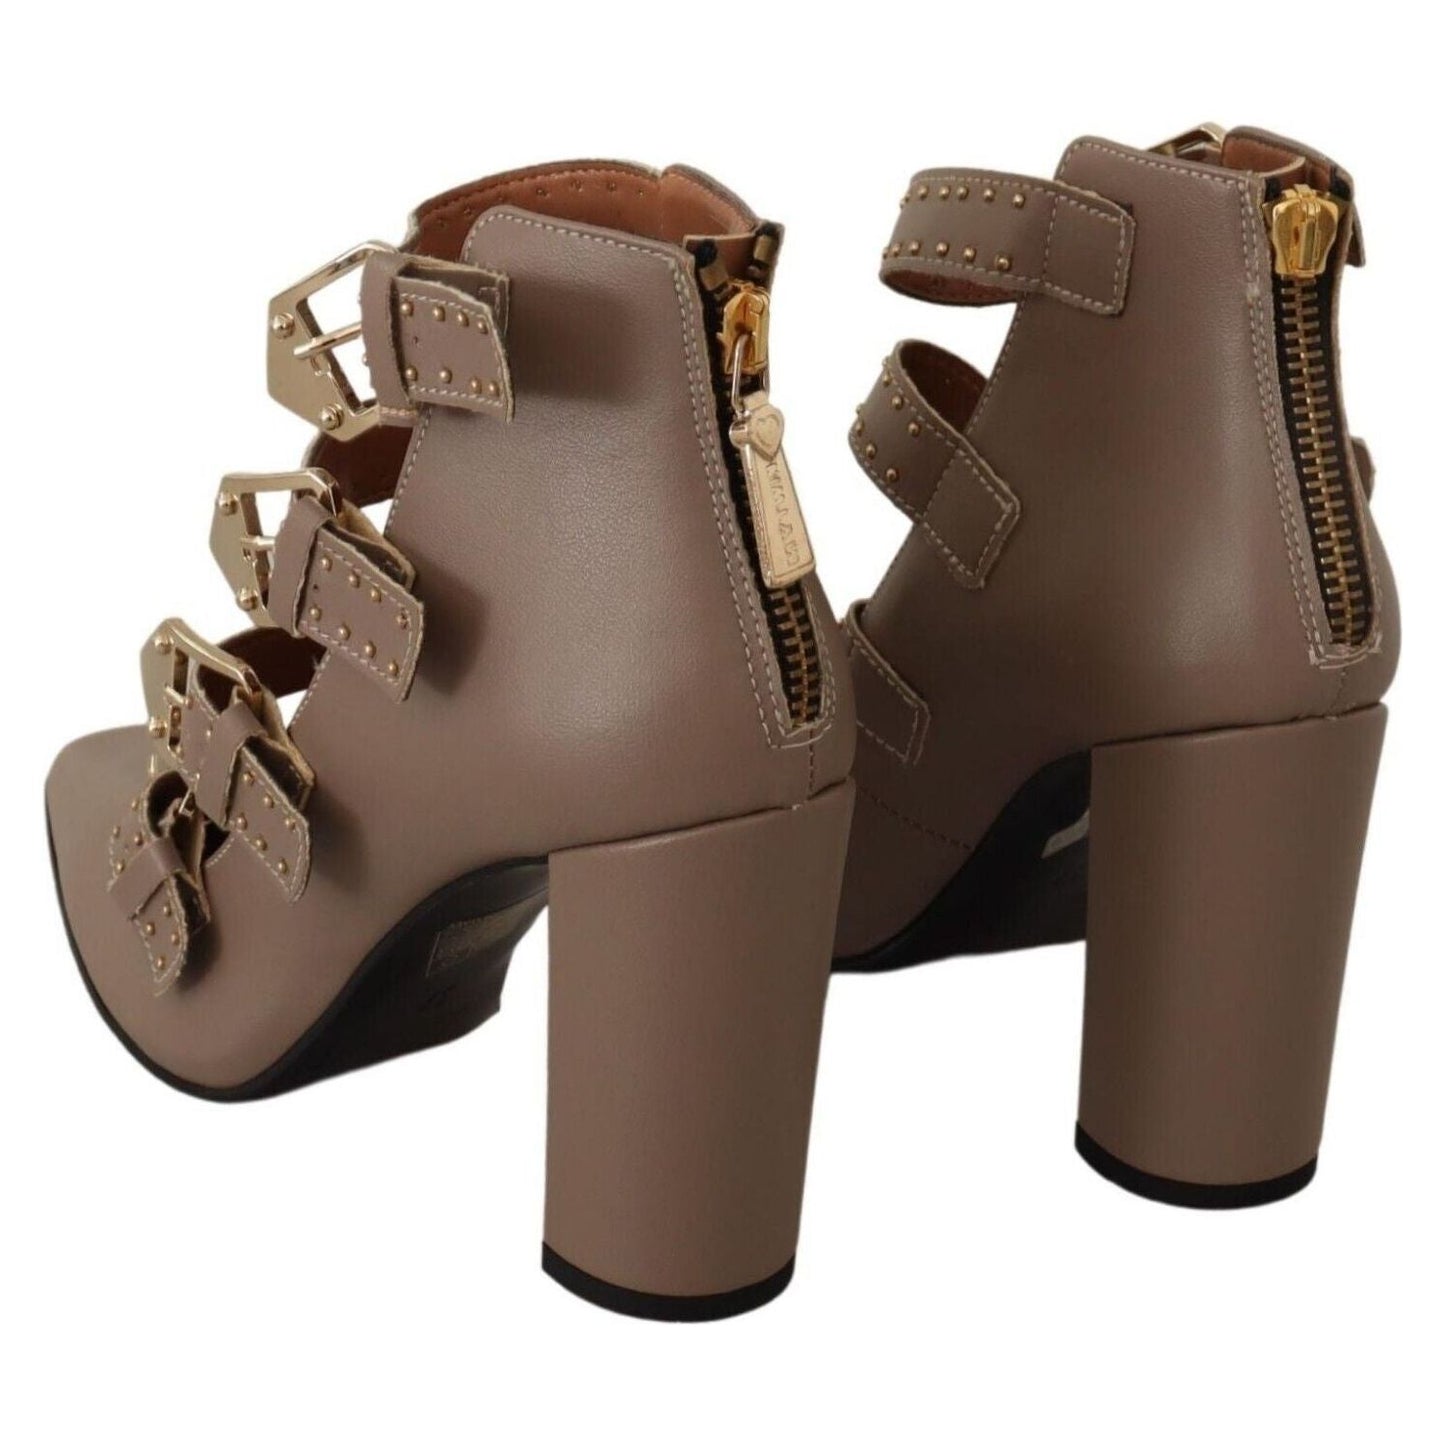 MY TWIN Elegant Leather Multi-Buckle Heels in Brown WOMAN PUMPS brown-leather-block-heels-multi-buckle-pumps-shoes s-l1600-2022-10-27T122122.782-53d409d4-21b.jpg